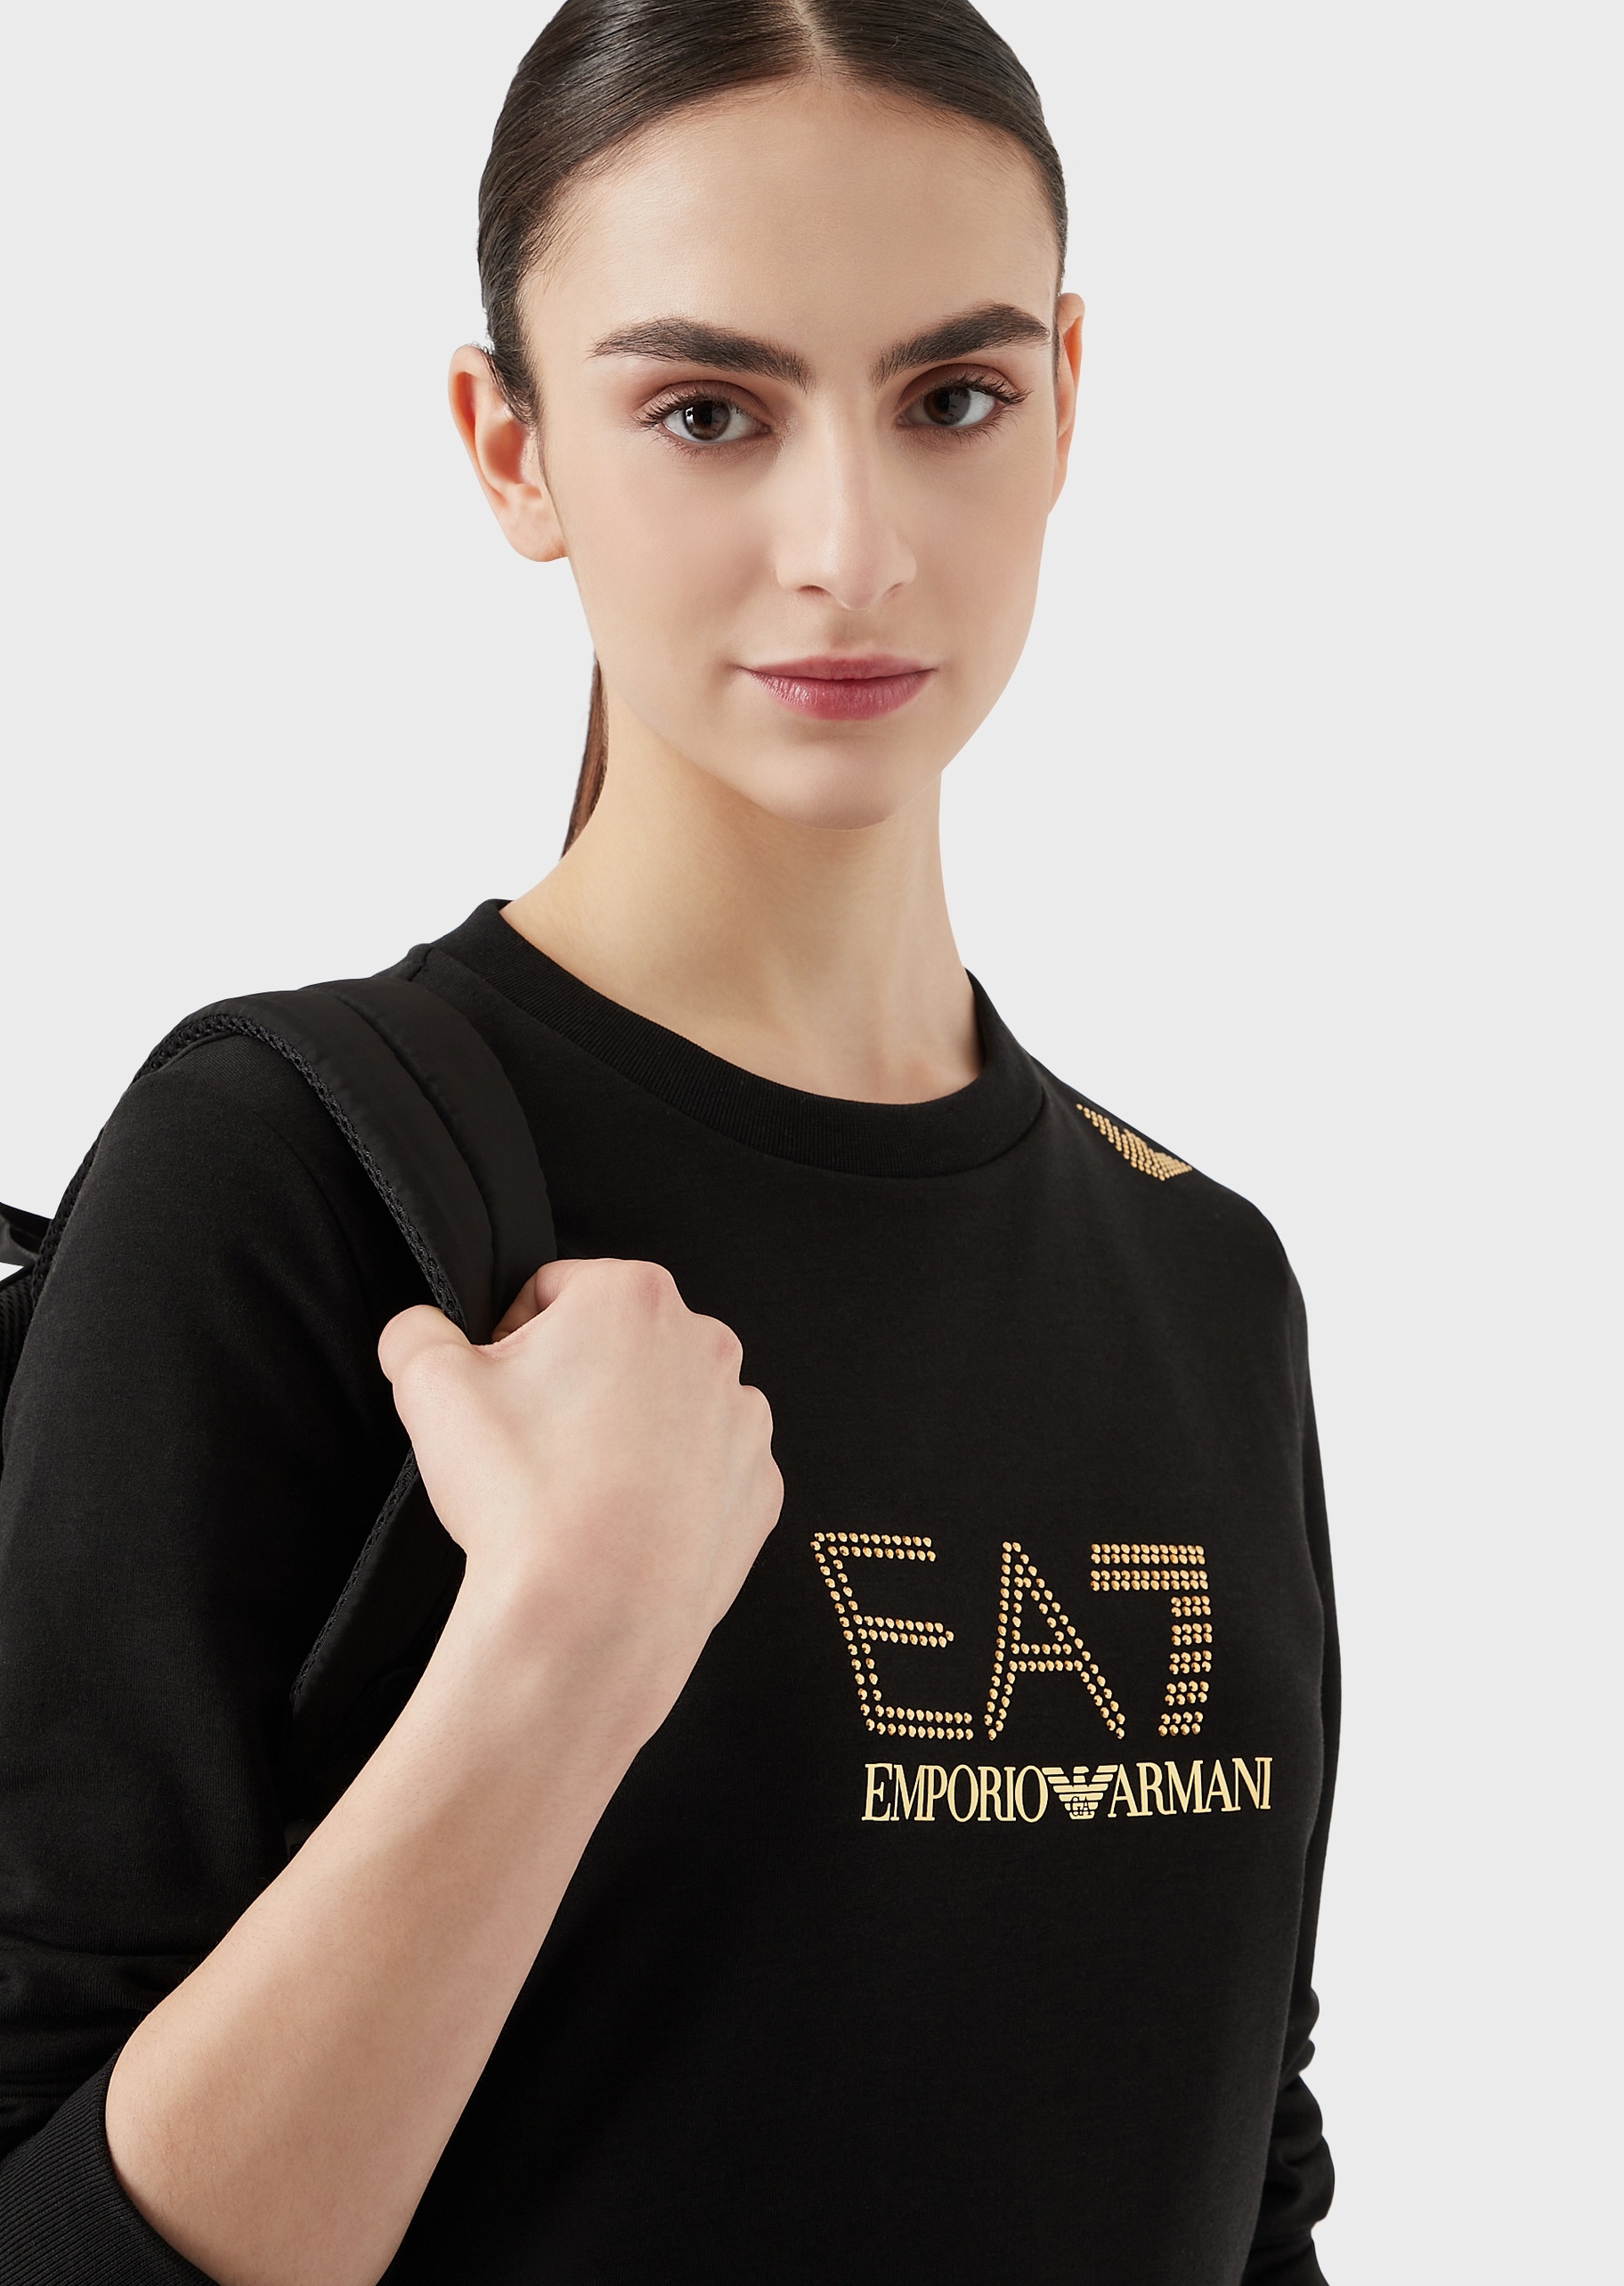 EA7 女士微弹合身长袖圆领创意LOGO运动卫衣